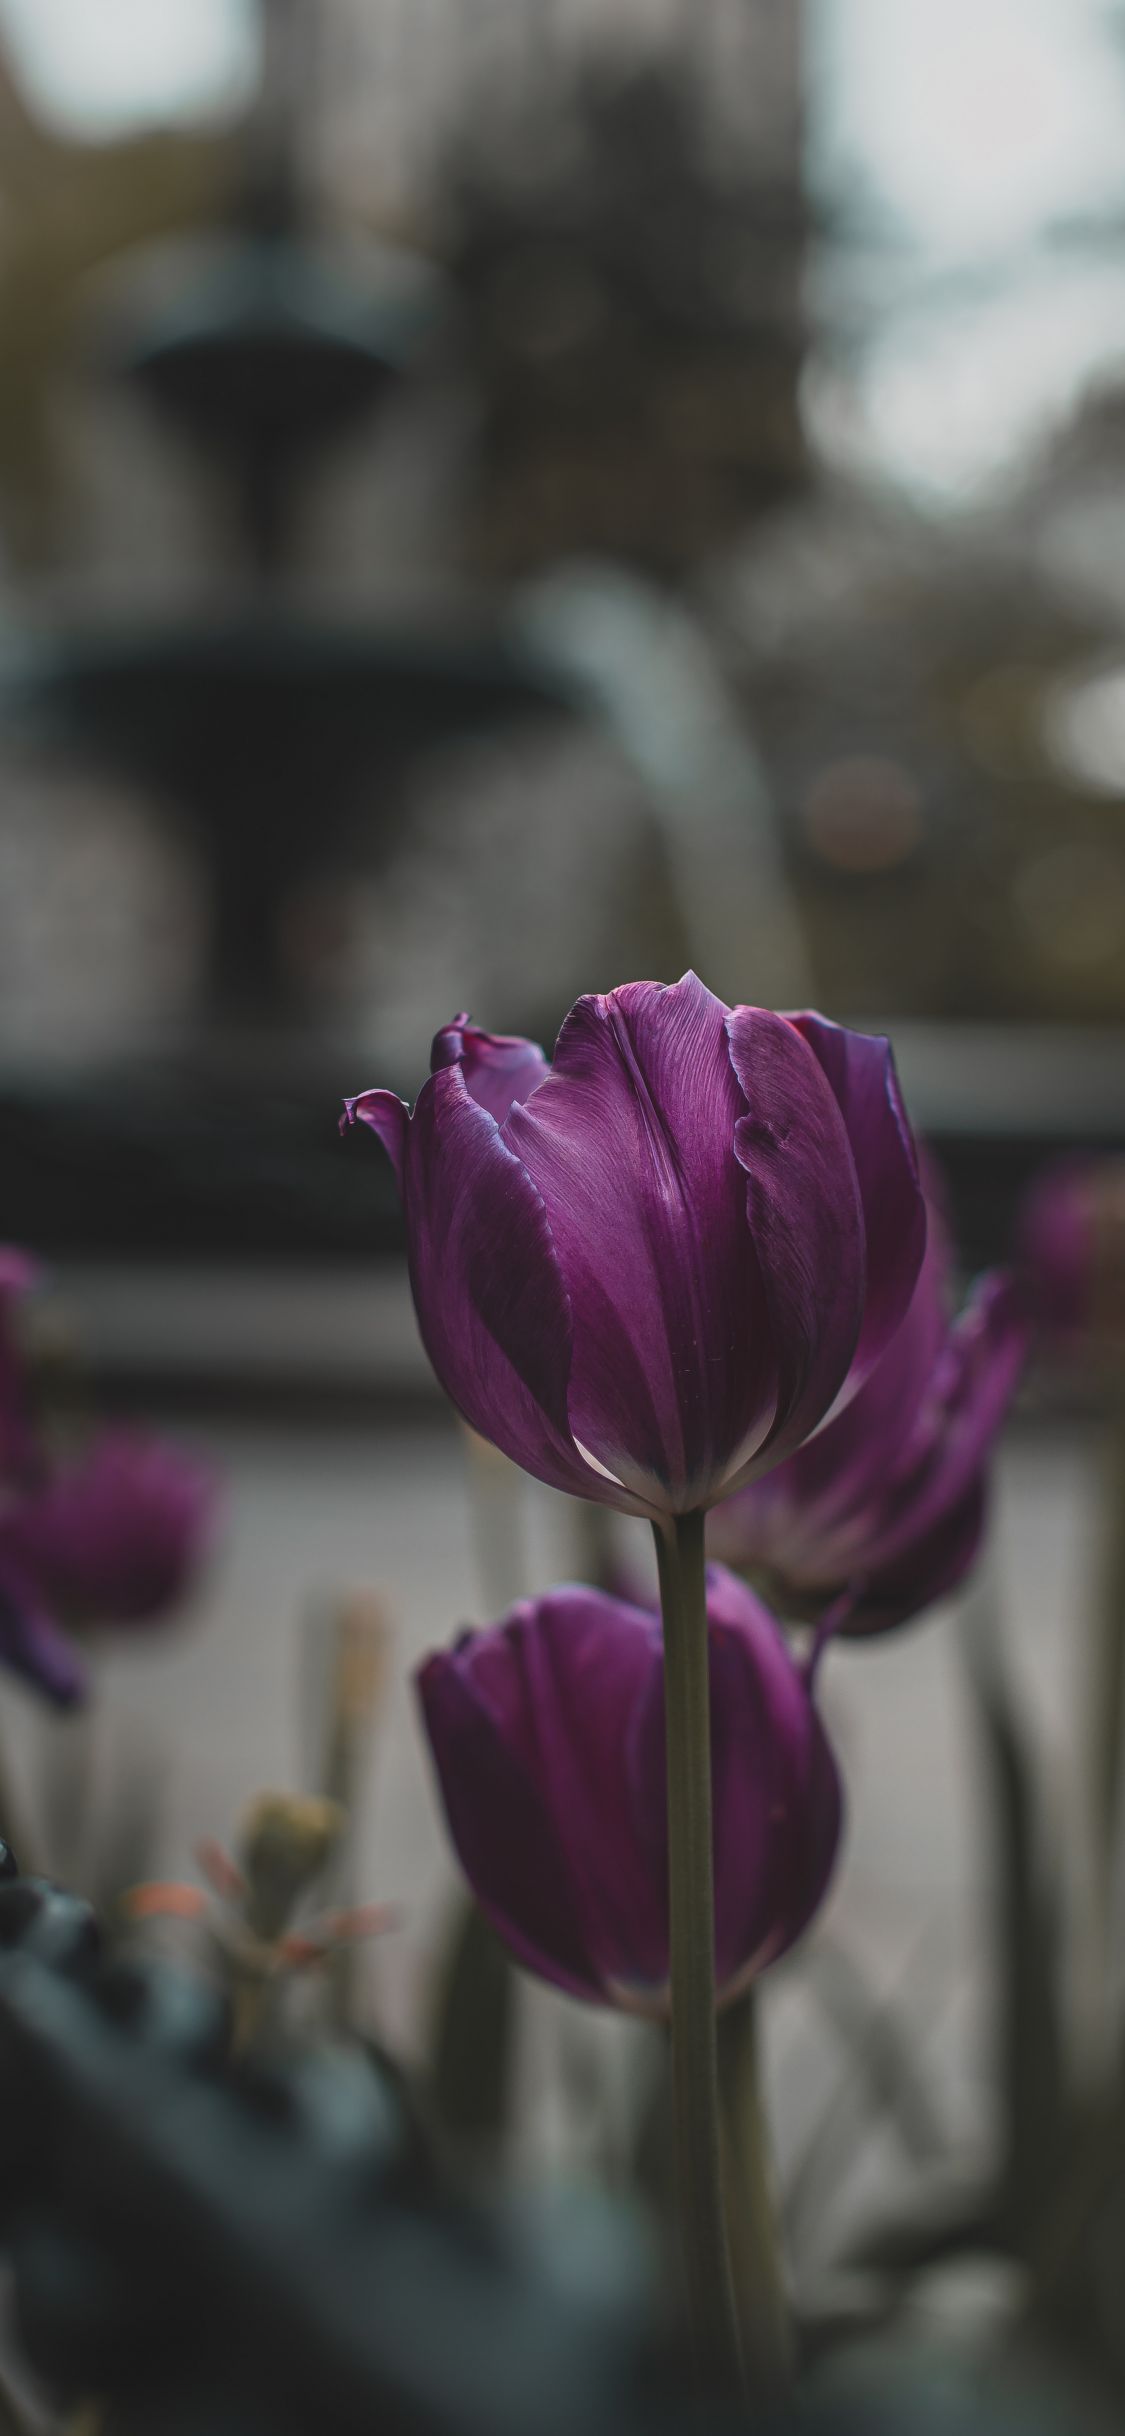 Hình nền hoa Tulip chất lượng cao